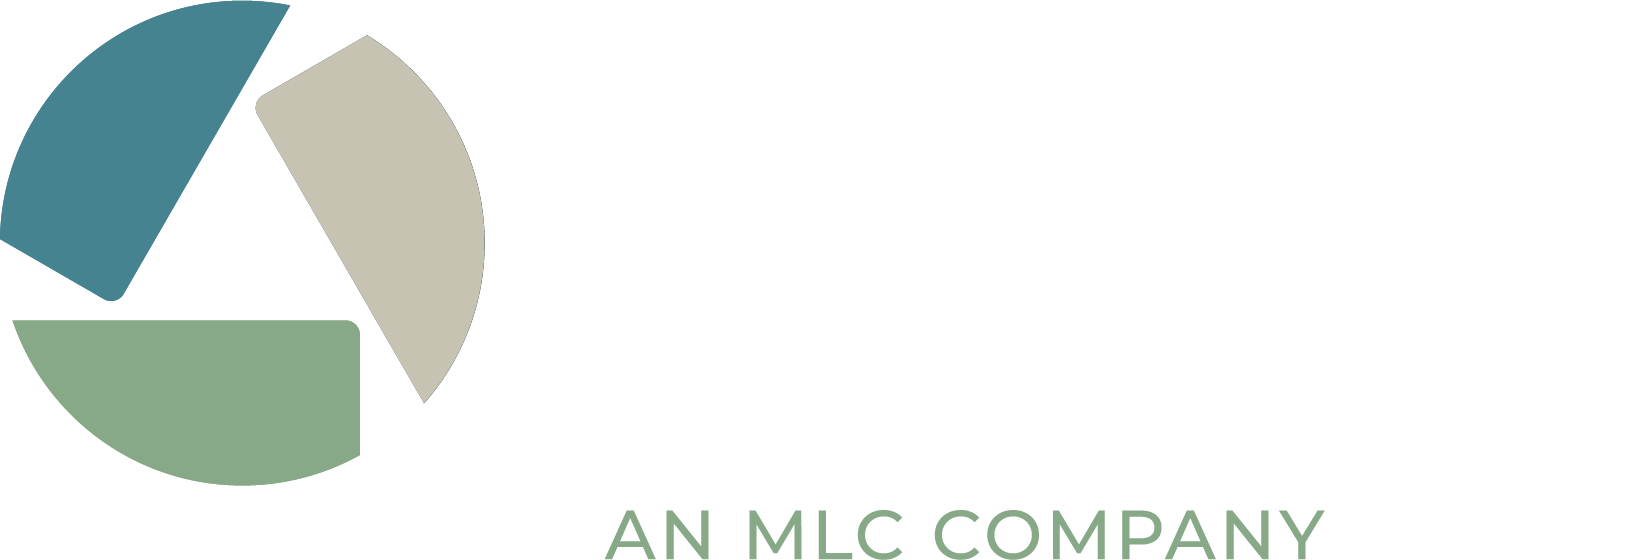 SingletonBirch-Tagline-Logo-RGB-Reverse